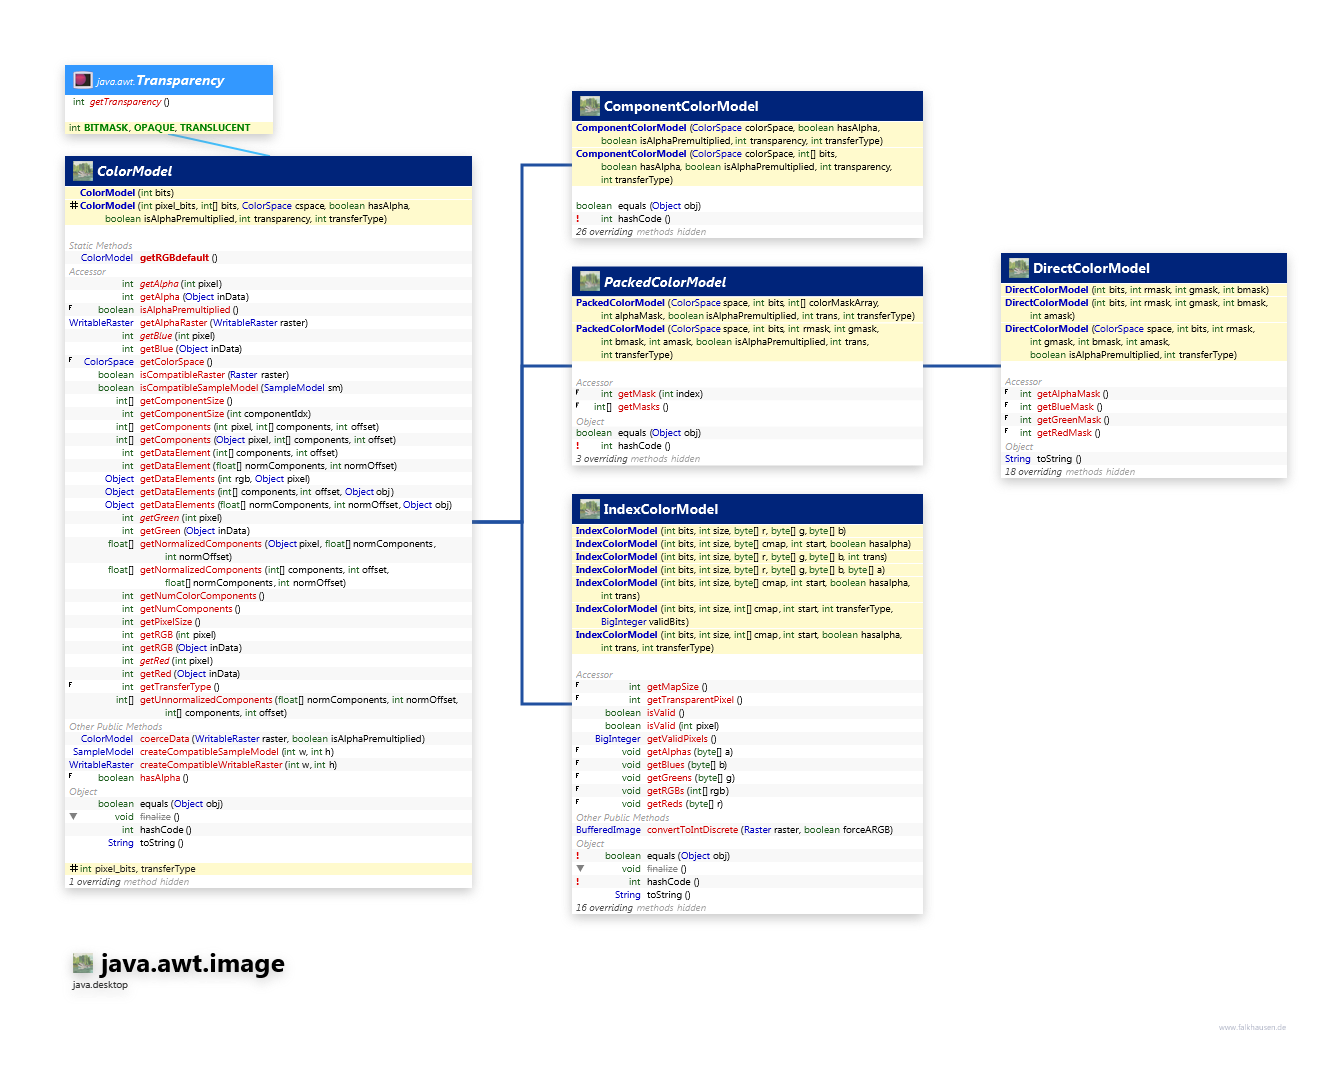 java.awt.image ColorModel class diagram and api documentation for Java 10